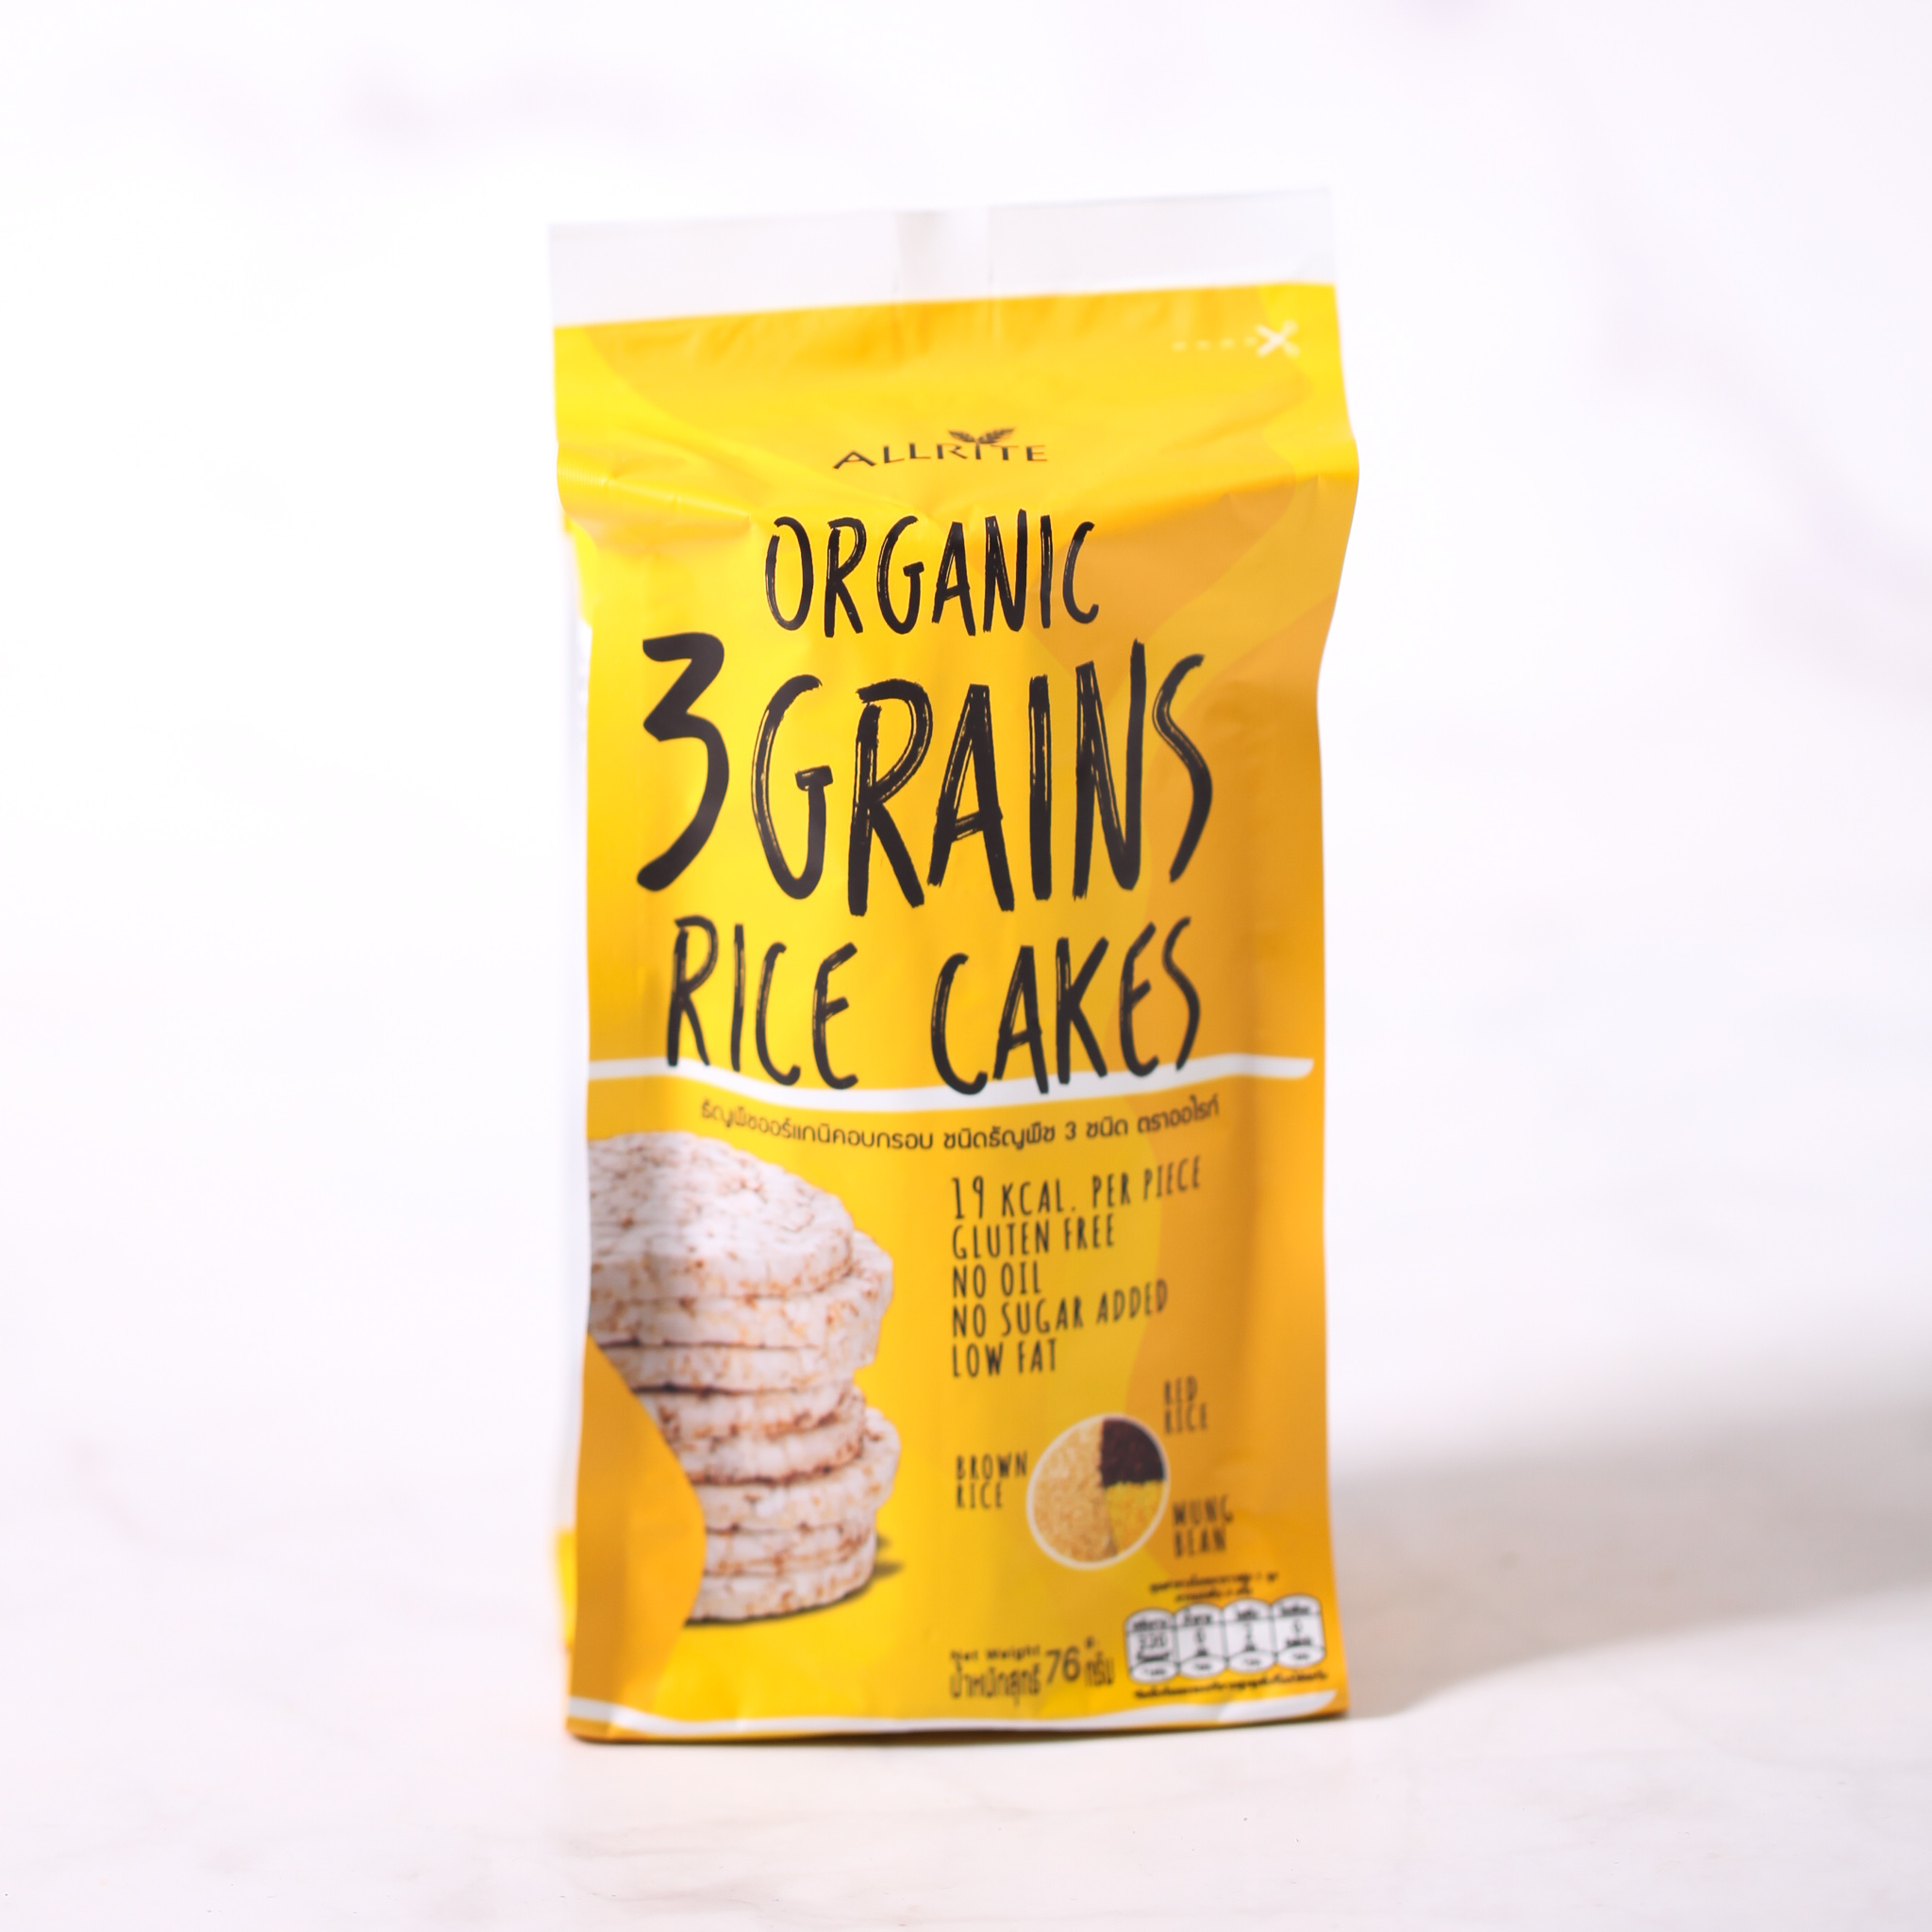 ALLRITE Organic Rice Cakes 3 Grains